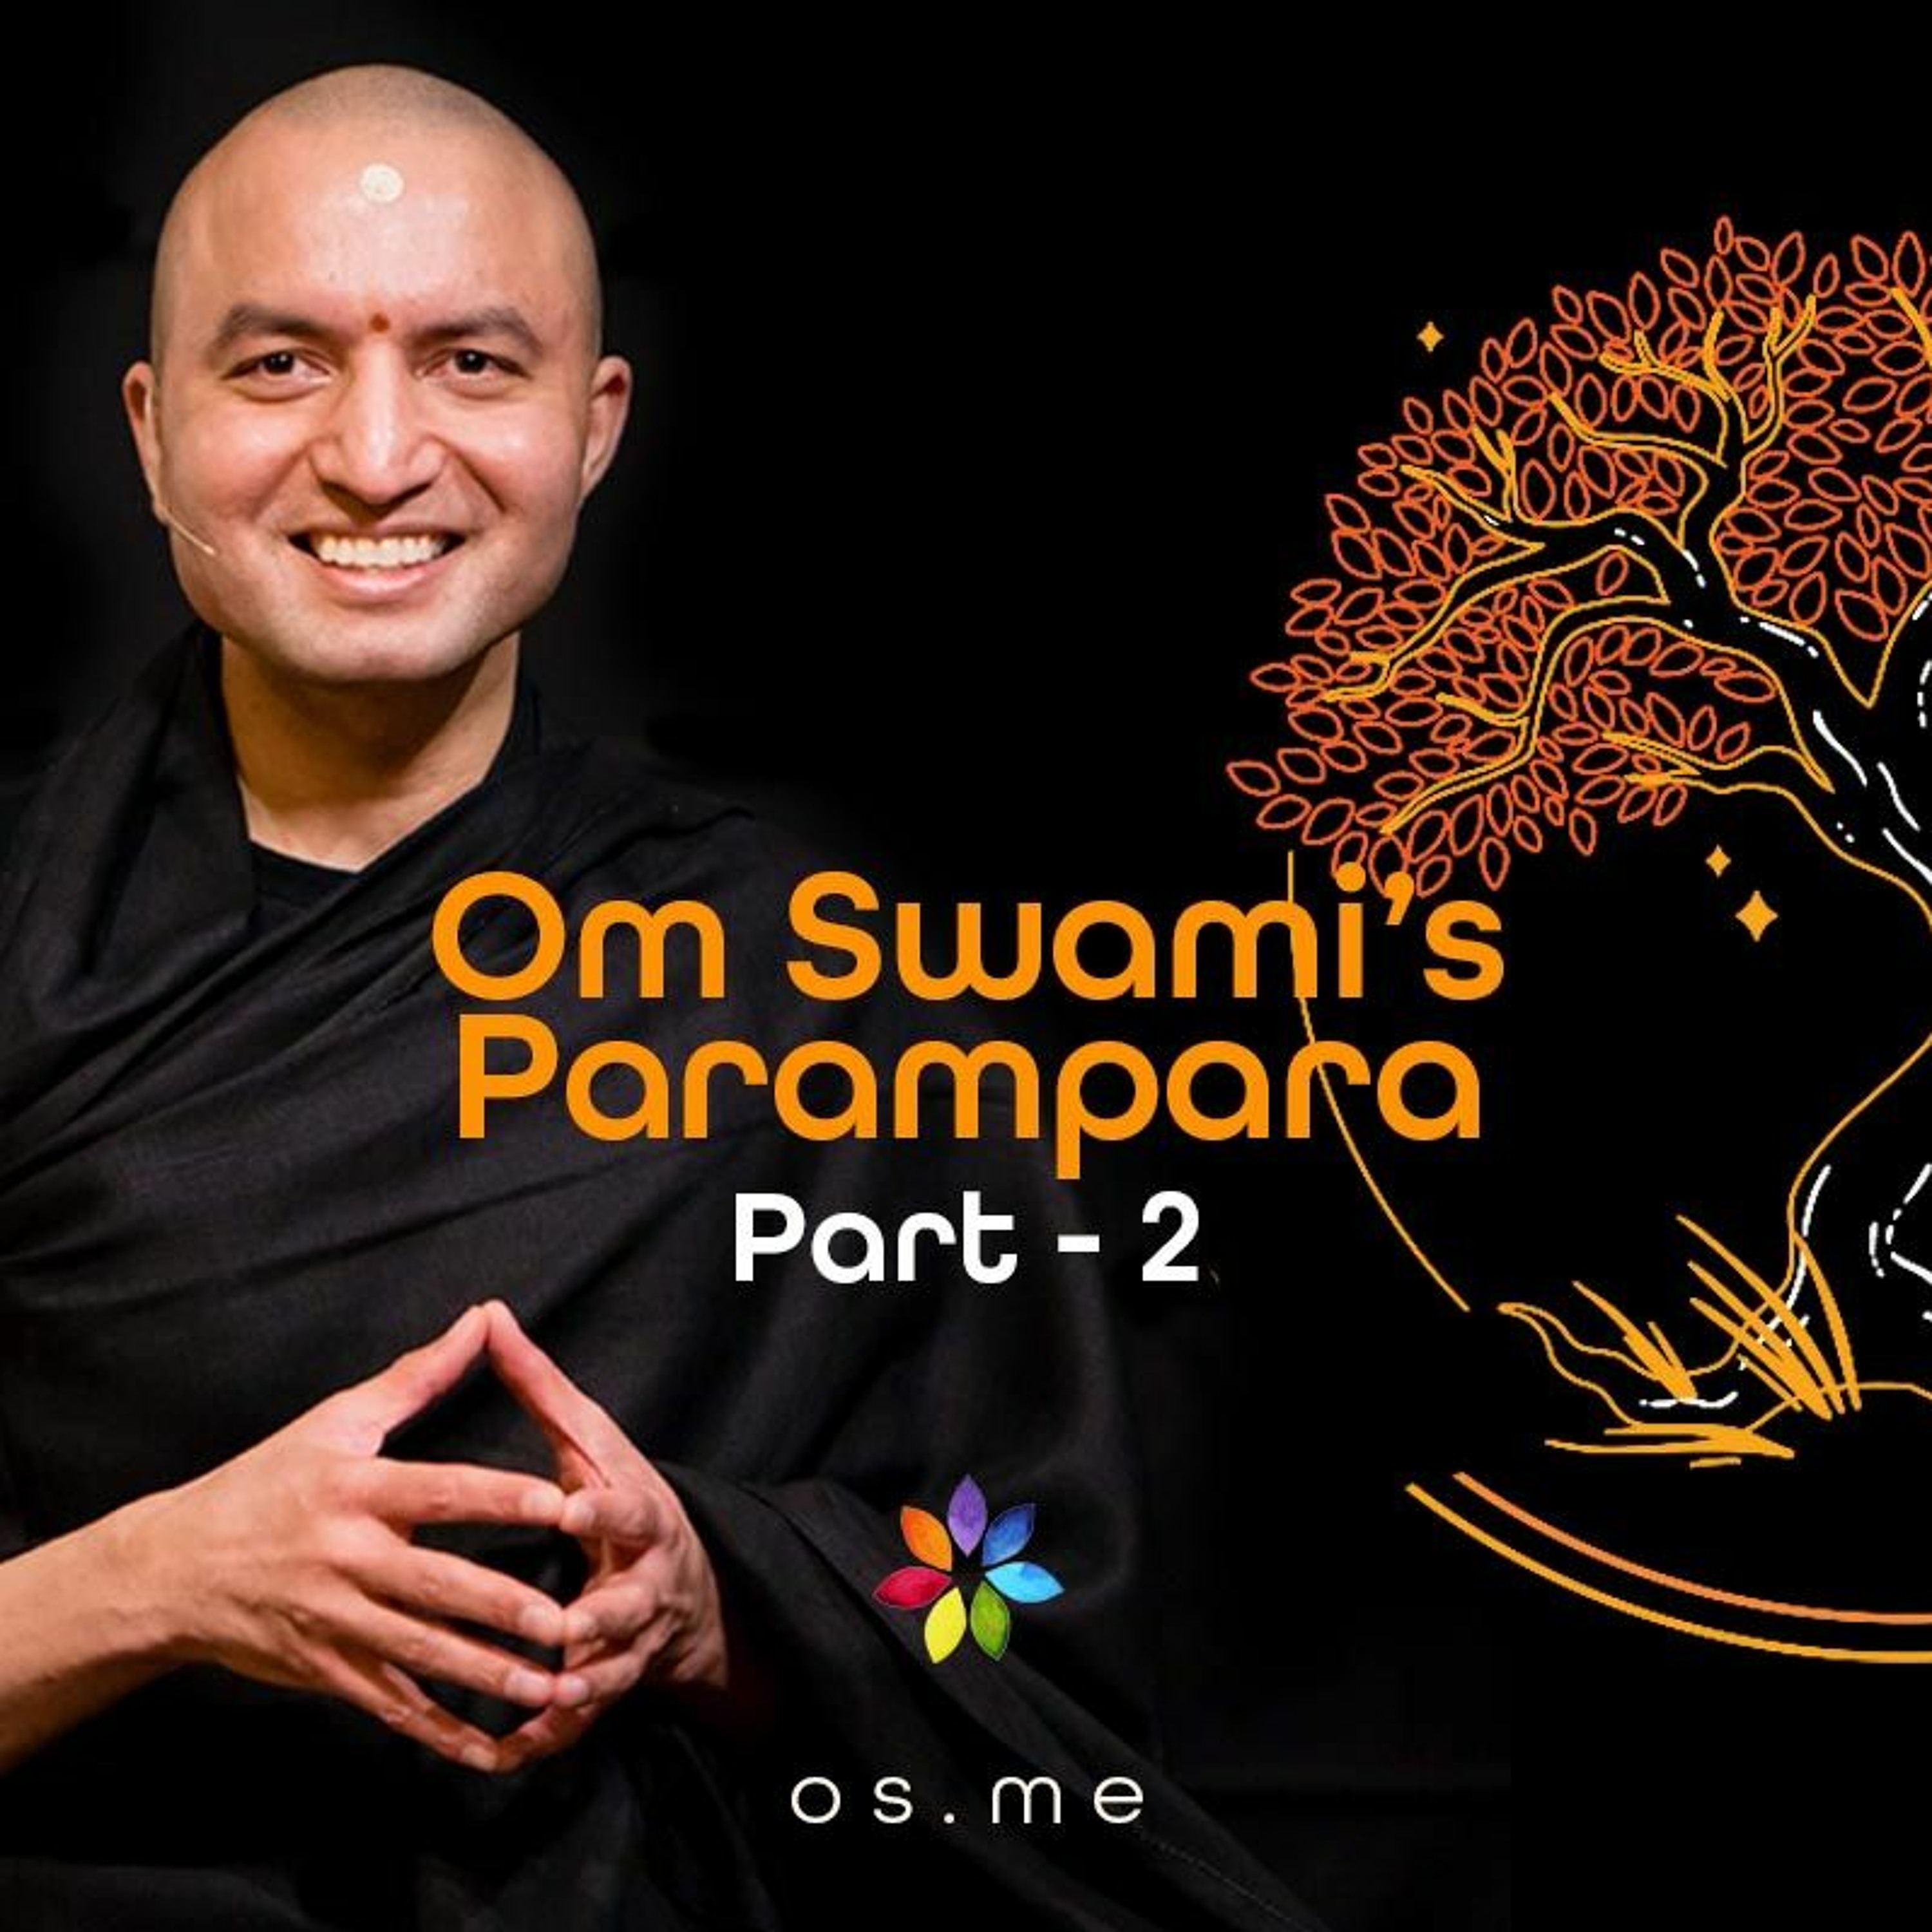 Om Swami’s Parampara (Lineage) - Part 2 [Hindi]